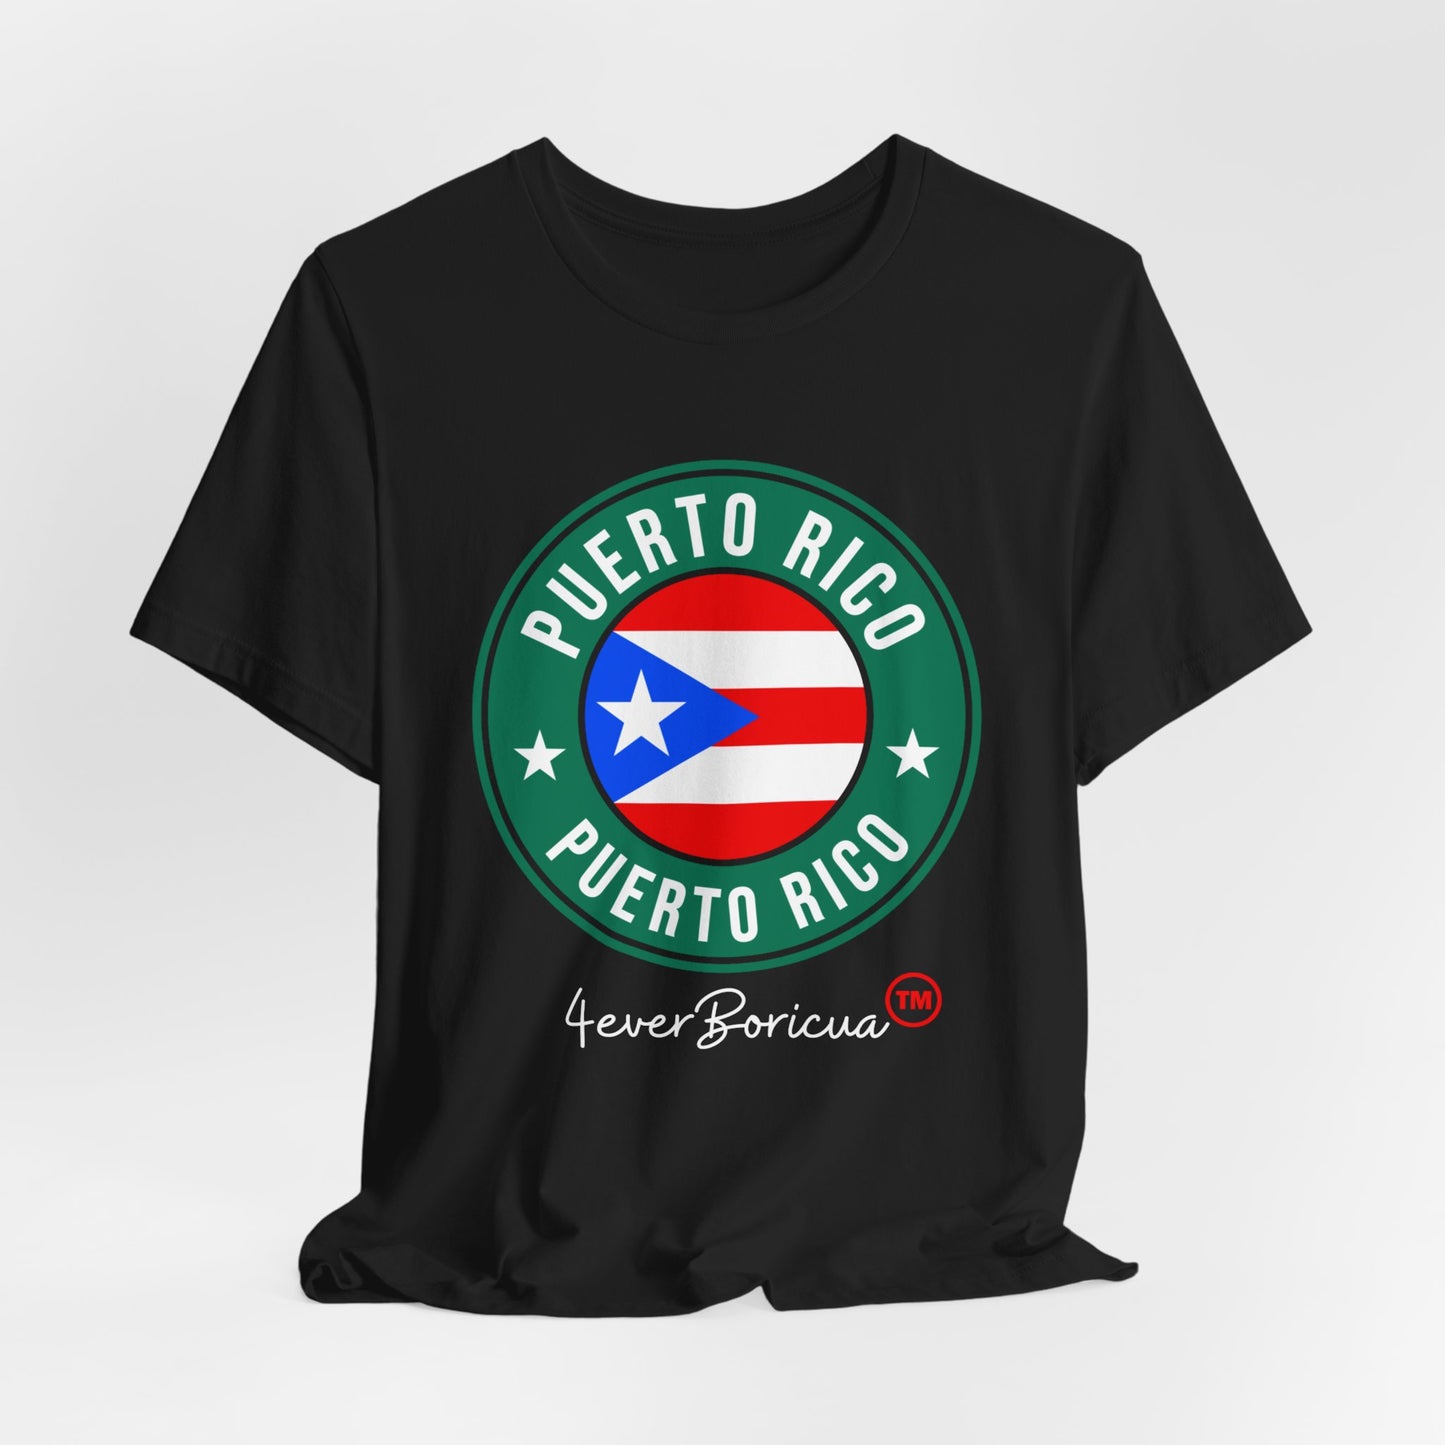 PUERTO RICO SEAL AND FLAG Unisex Boricua Shirt 4everBoricua™️